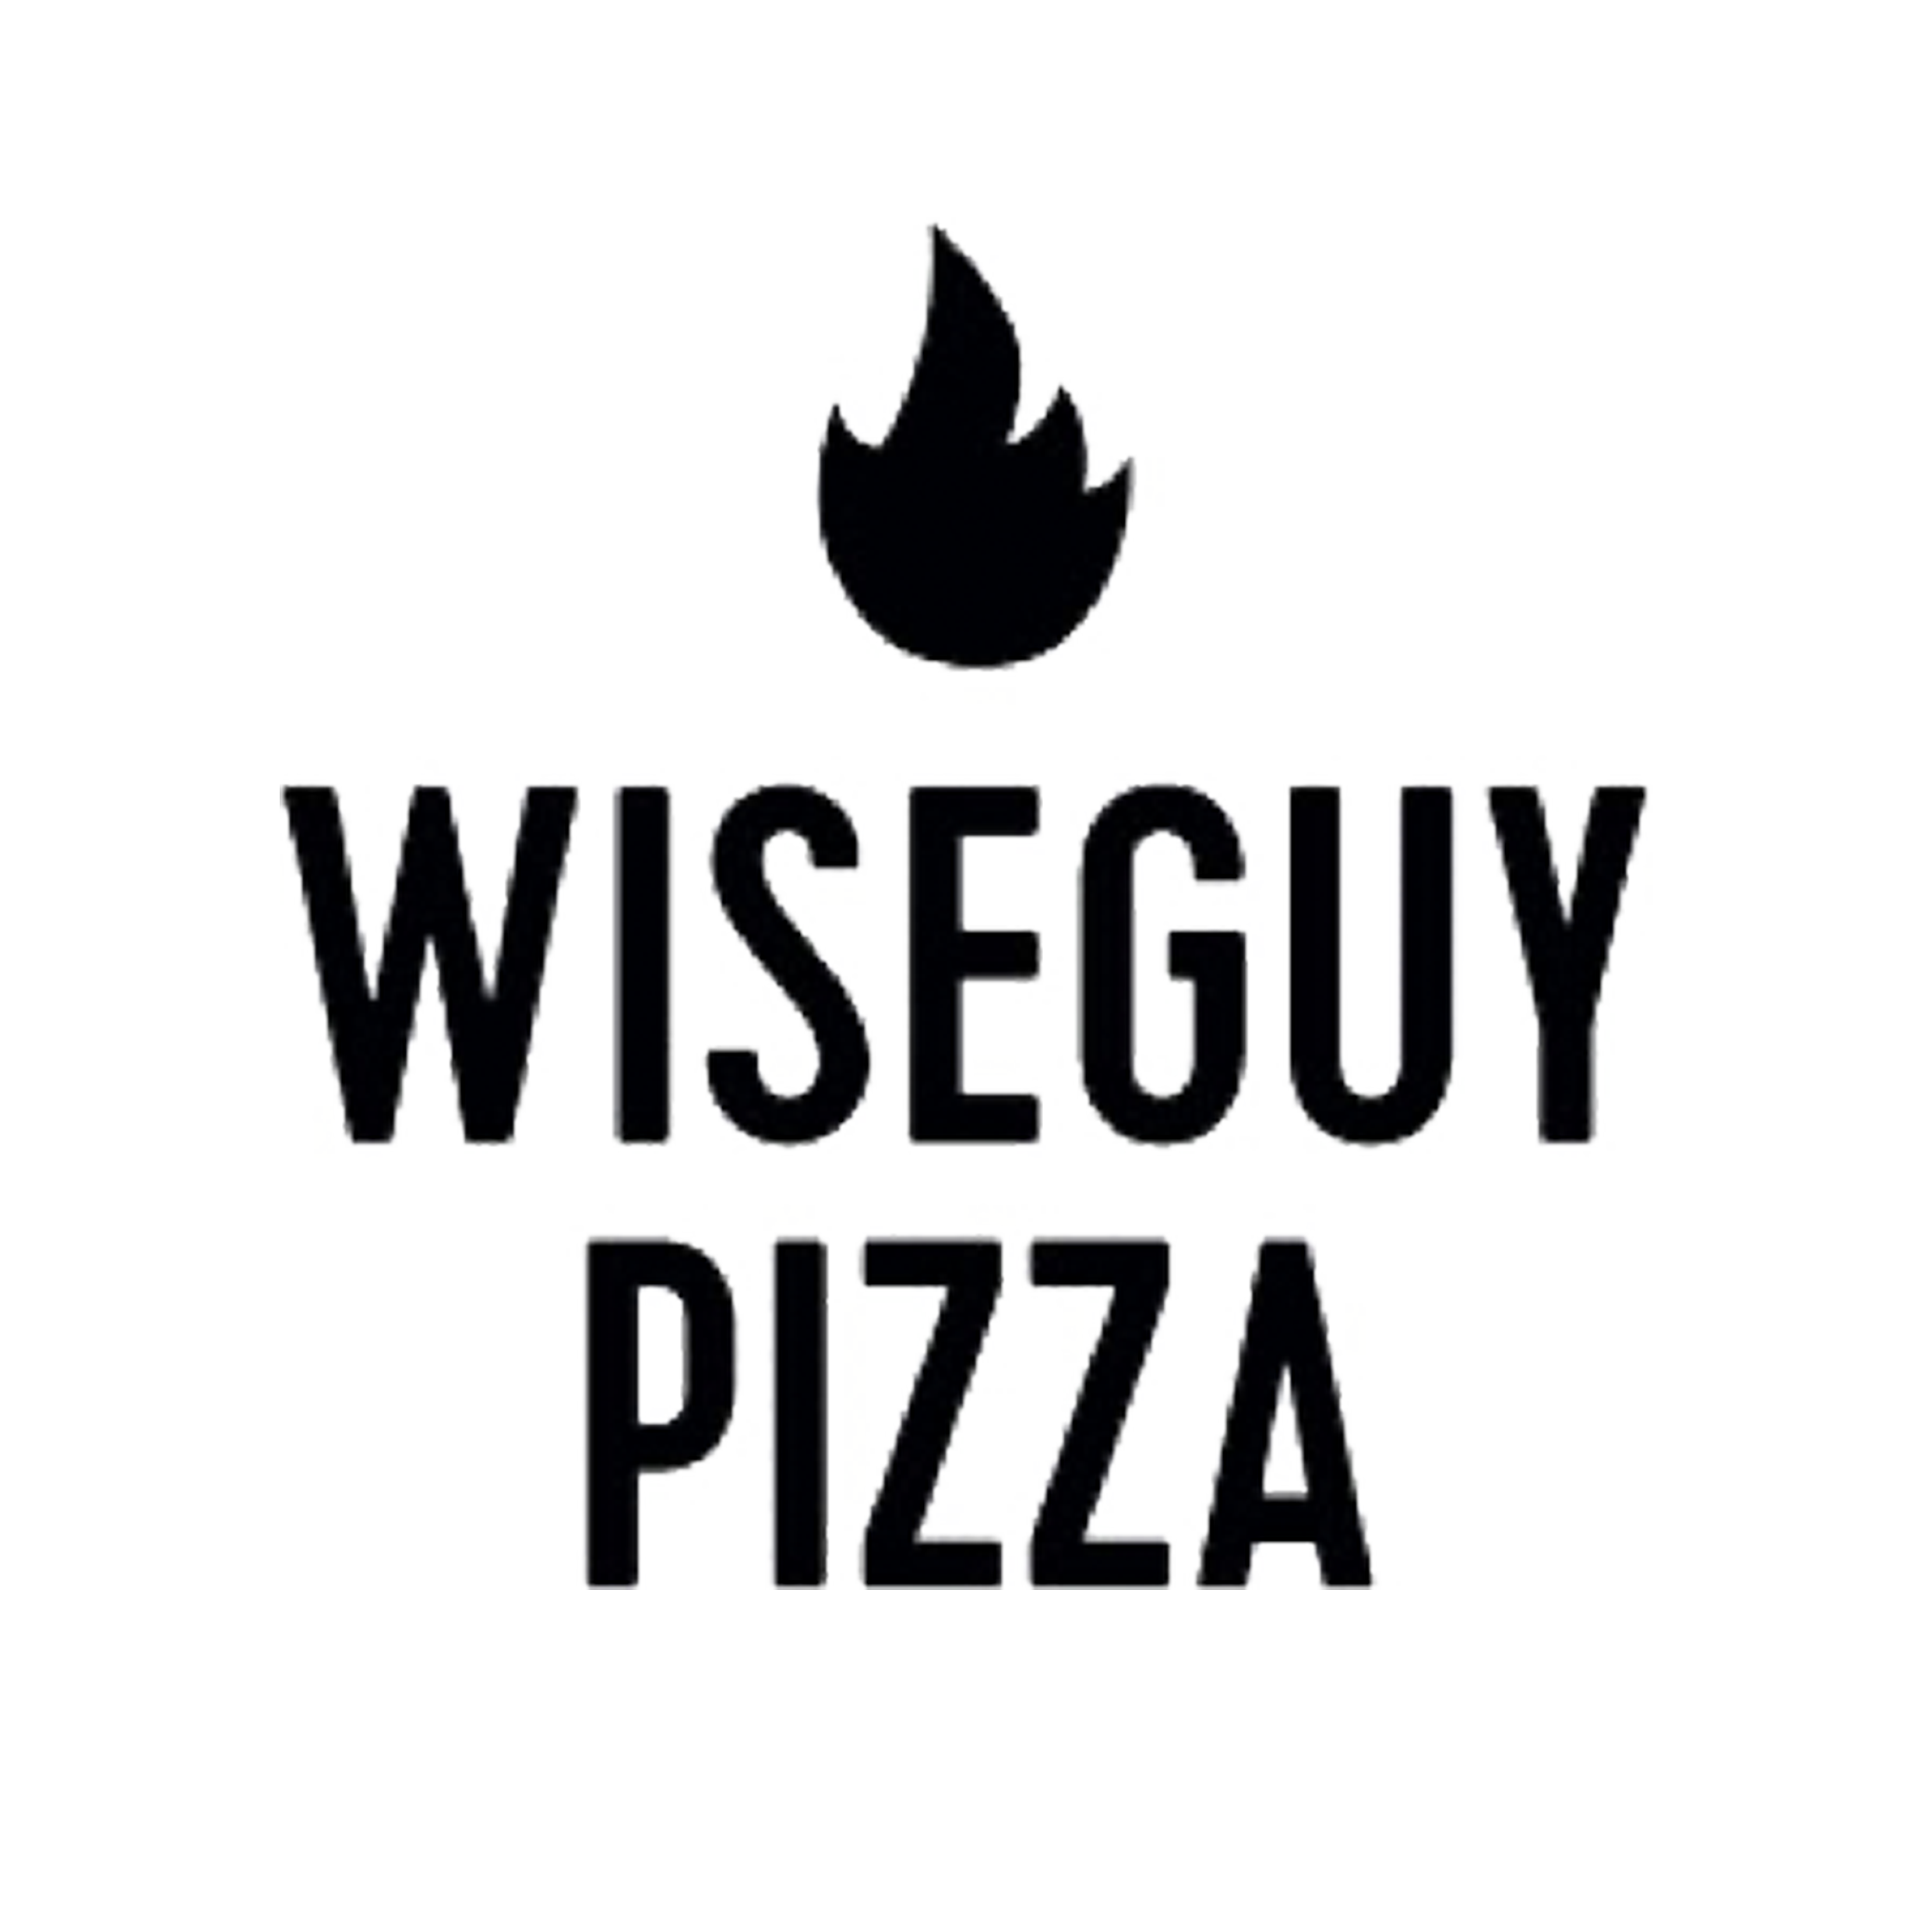 Wiseguy Pizza (Copy)